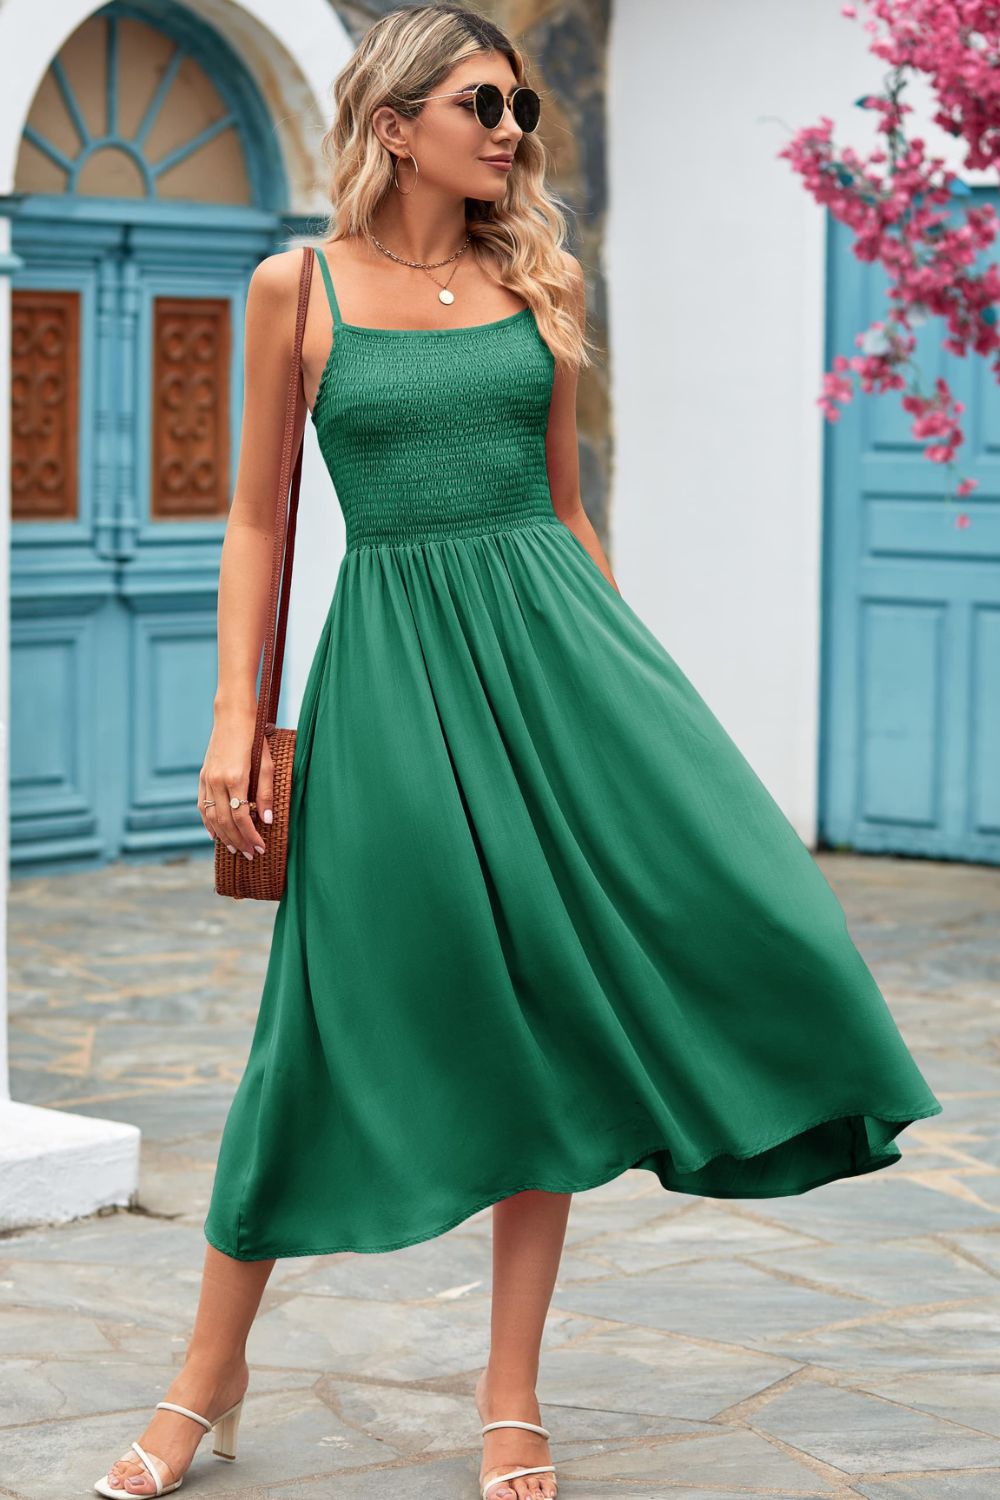 Smocked Spaghetti Strap Midi Dress - Shop women apparel, Jewelry, bath & beauty products online - Arwen's Boutique